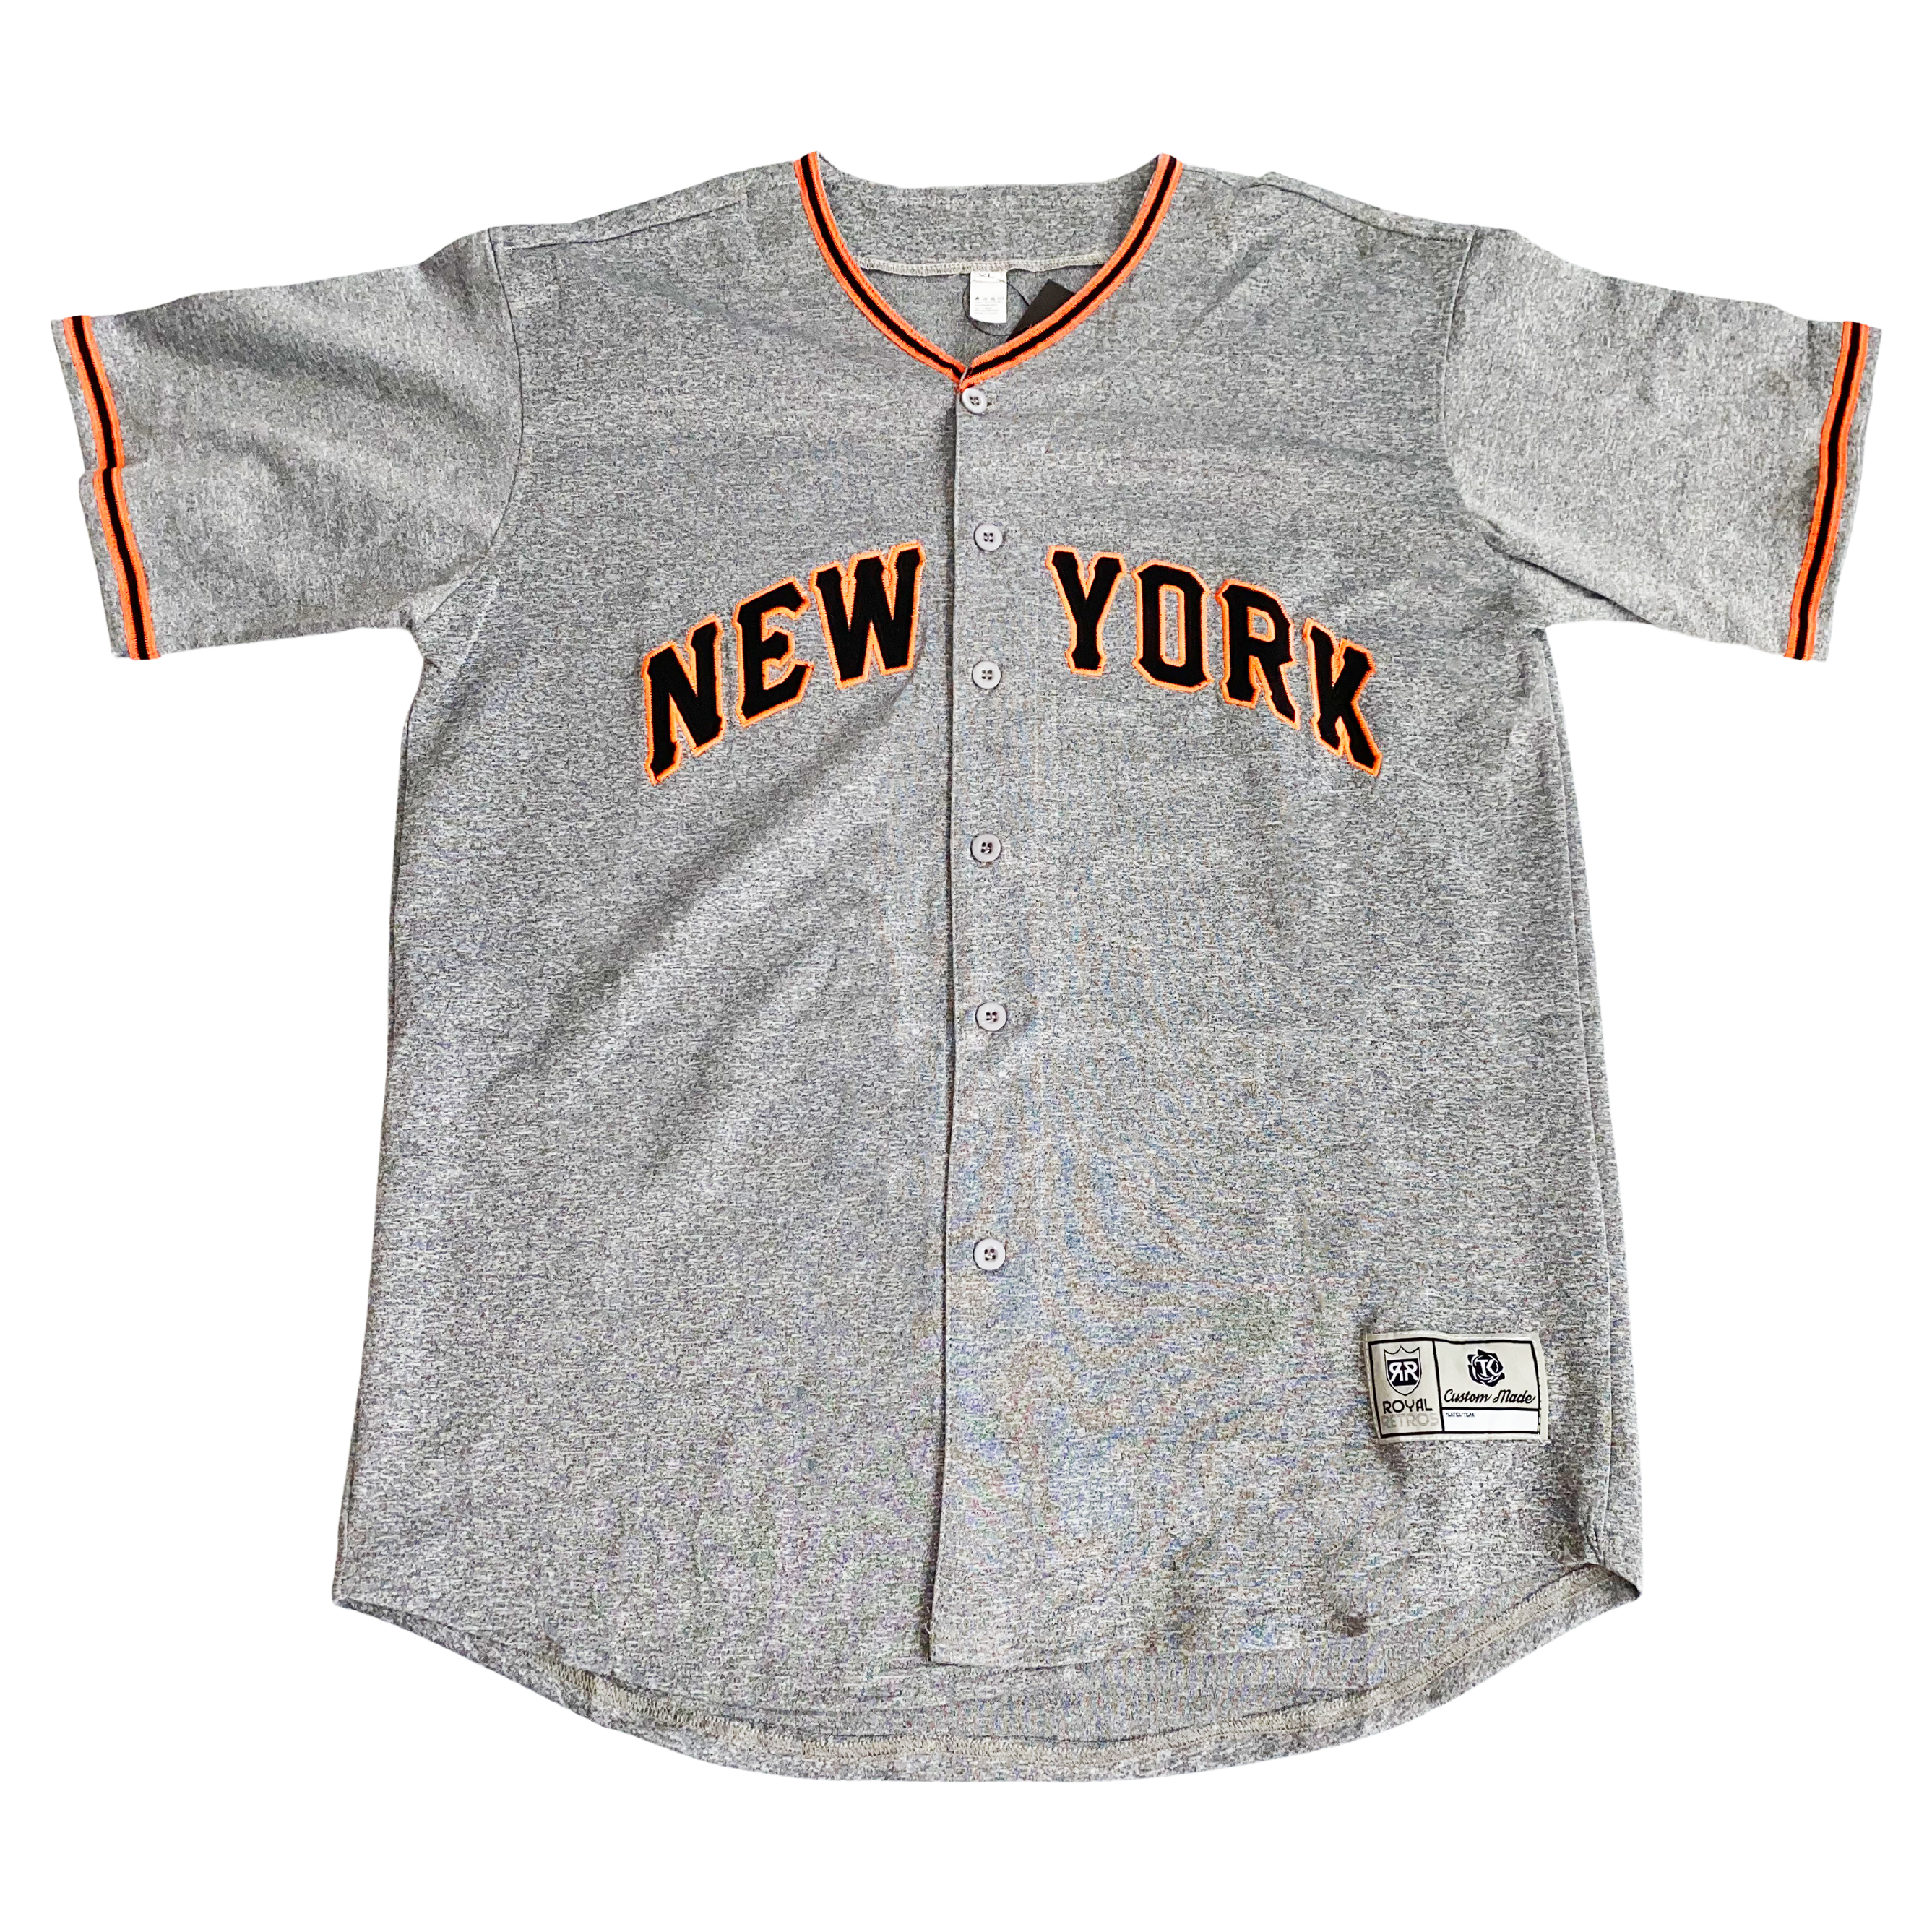 New York Baseball Jersey, New York Baseball Shirt, New York Jersey